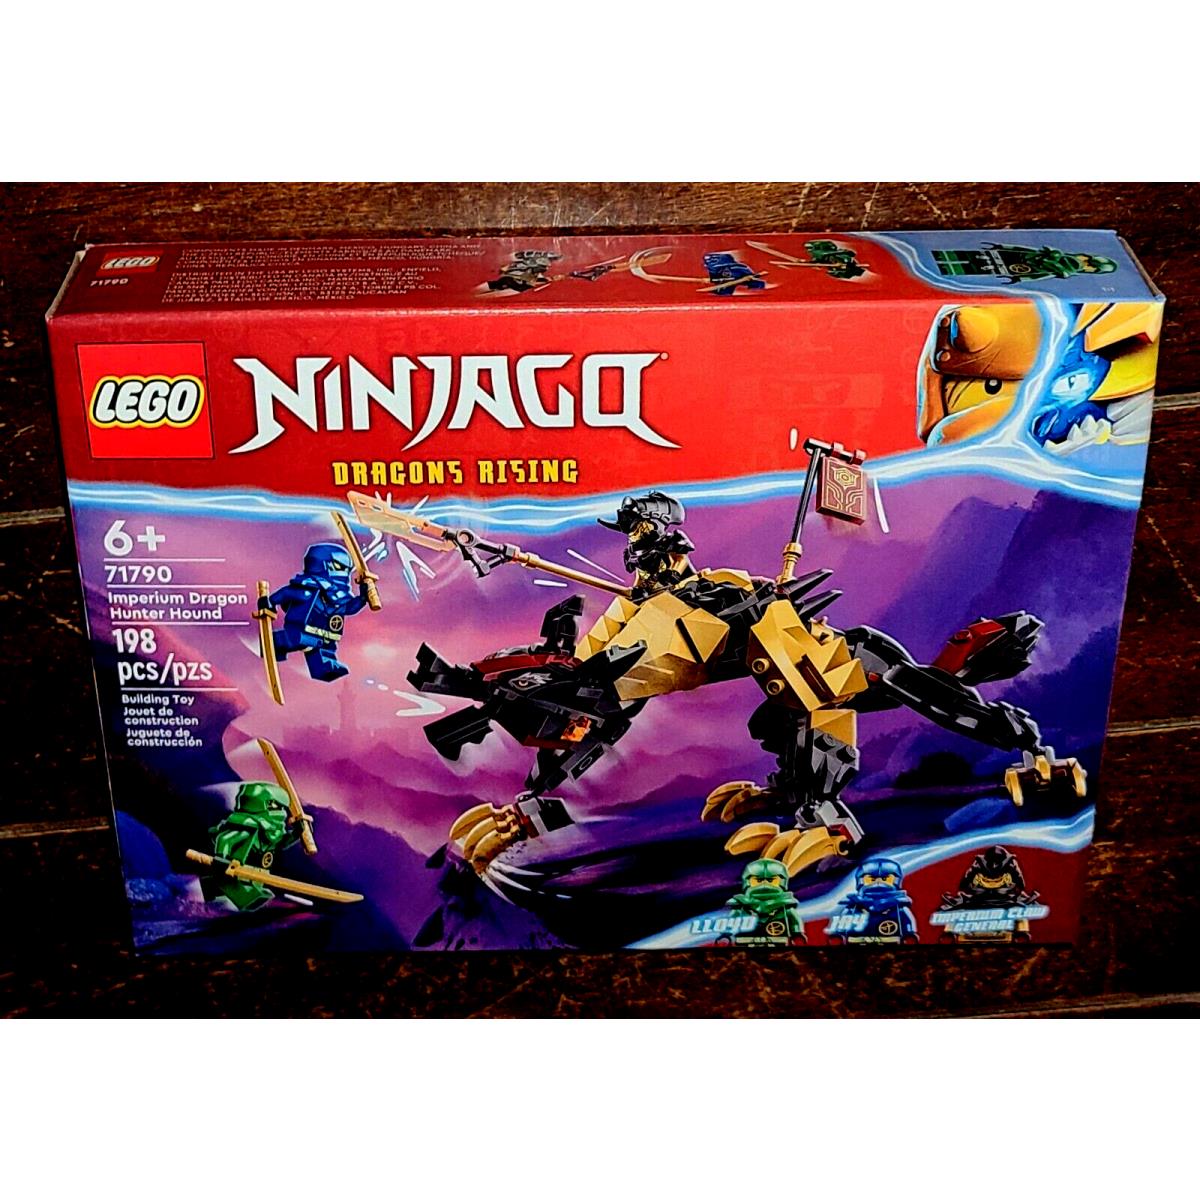 Lego Ninjago Imperium Dragon Hunter Hound 71790 Building Set